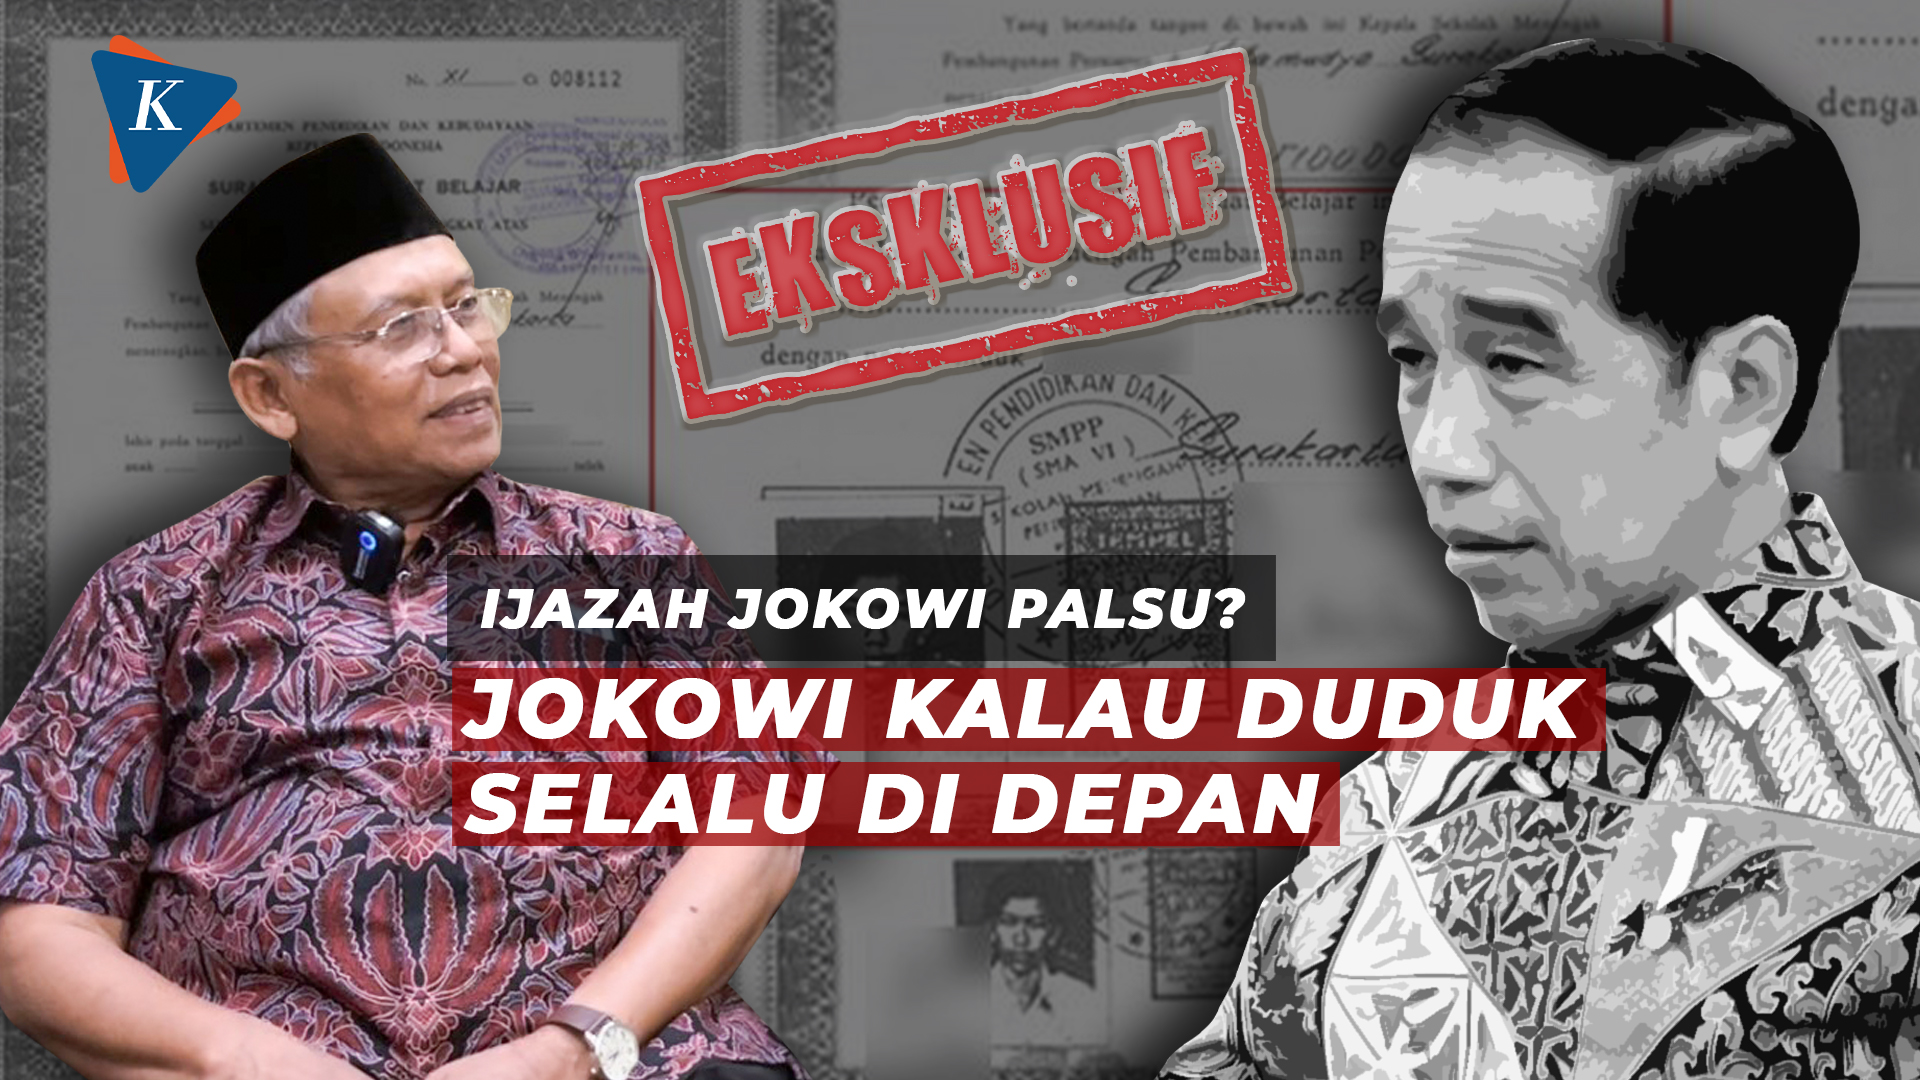 [EKSKLUSIF] Cerita Guru SMA tentang Jokowi: Duduk Paling Depan, Rambut Agak Gondrong